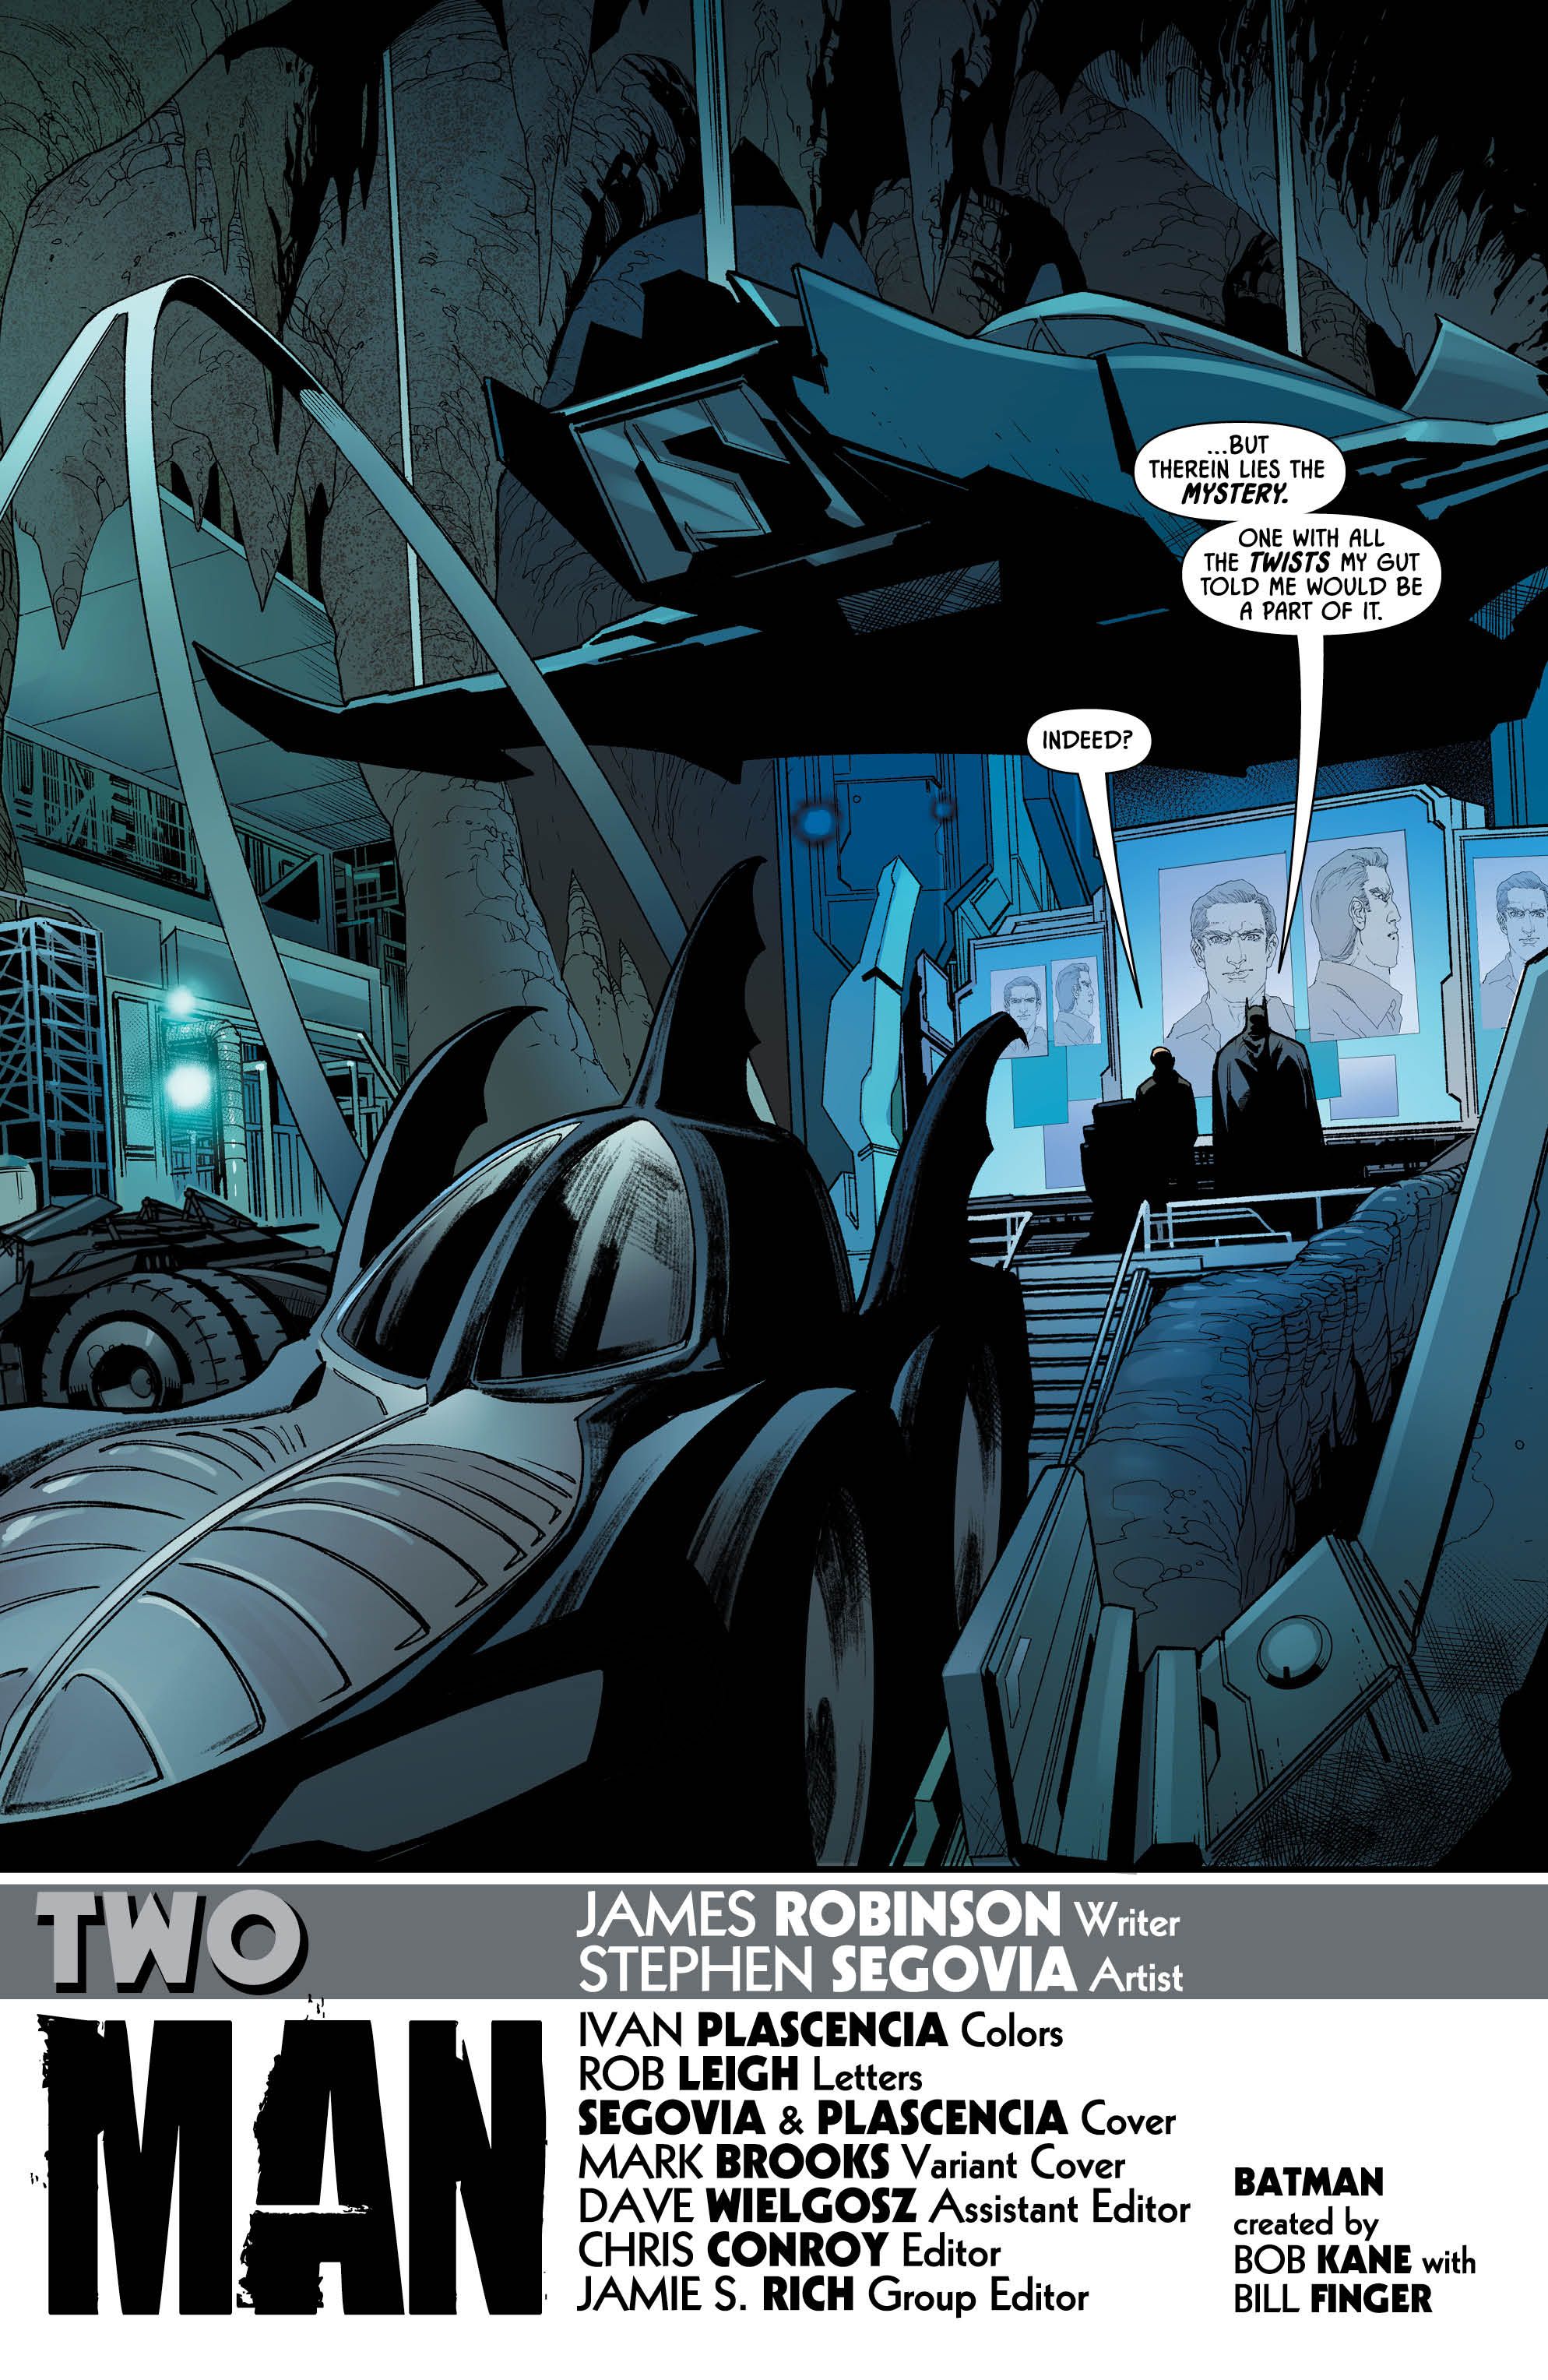 Detective Comics #989 Brooks Variant